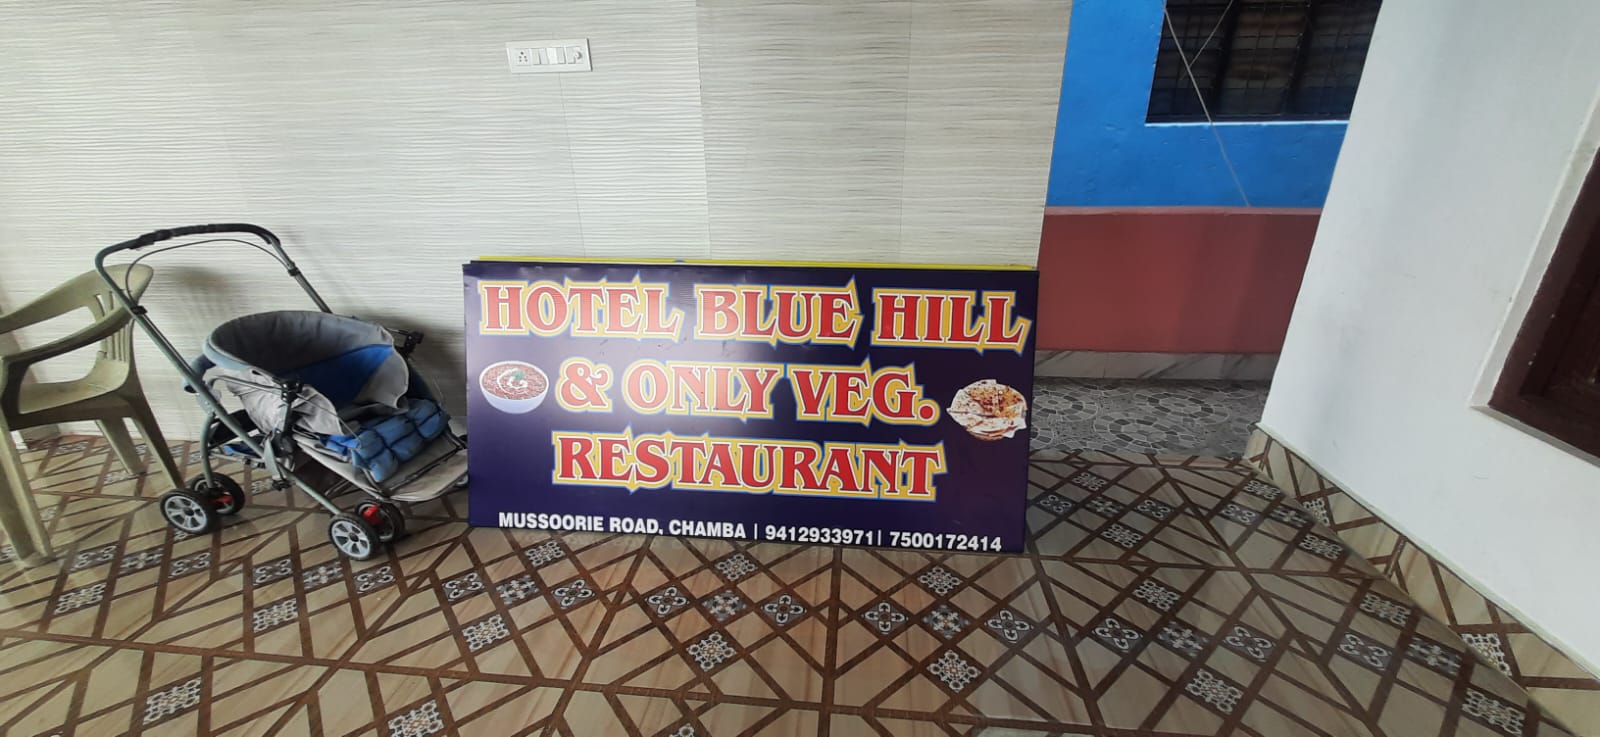 veg restaurant in chamba8